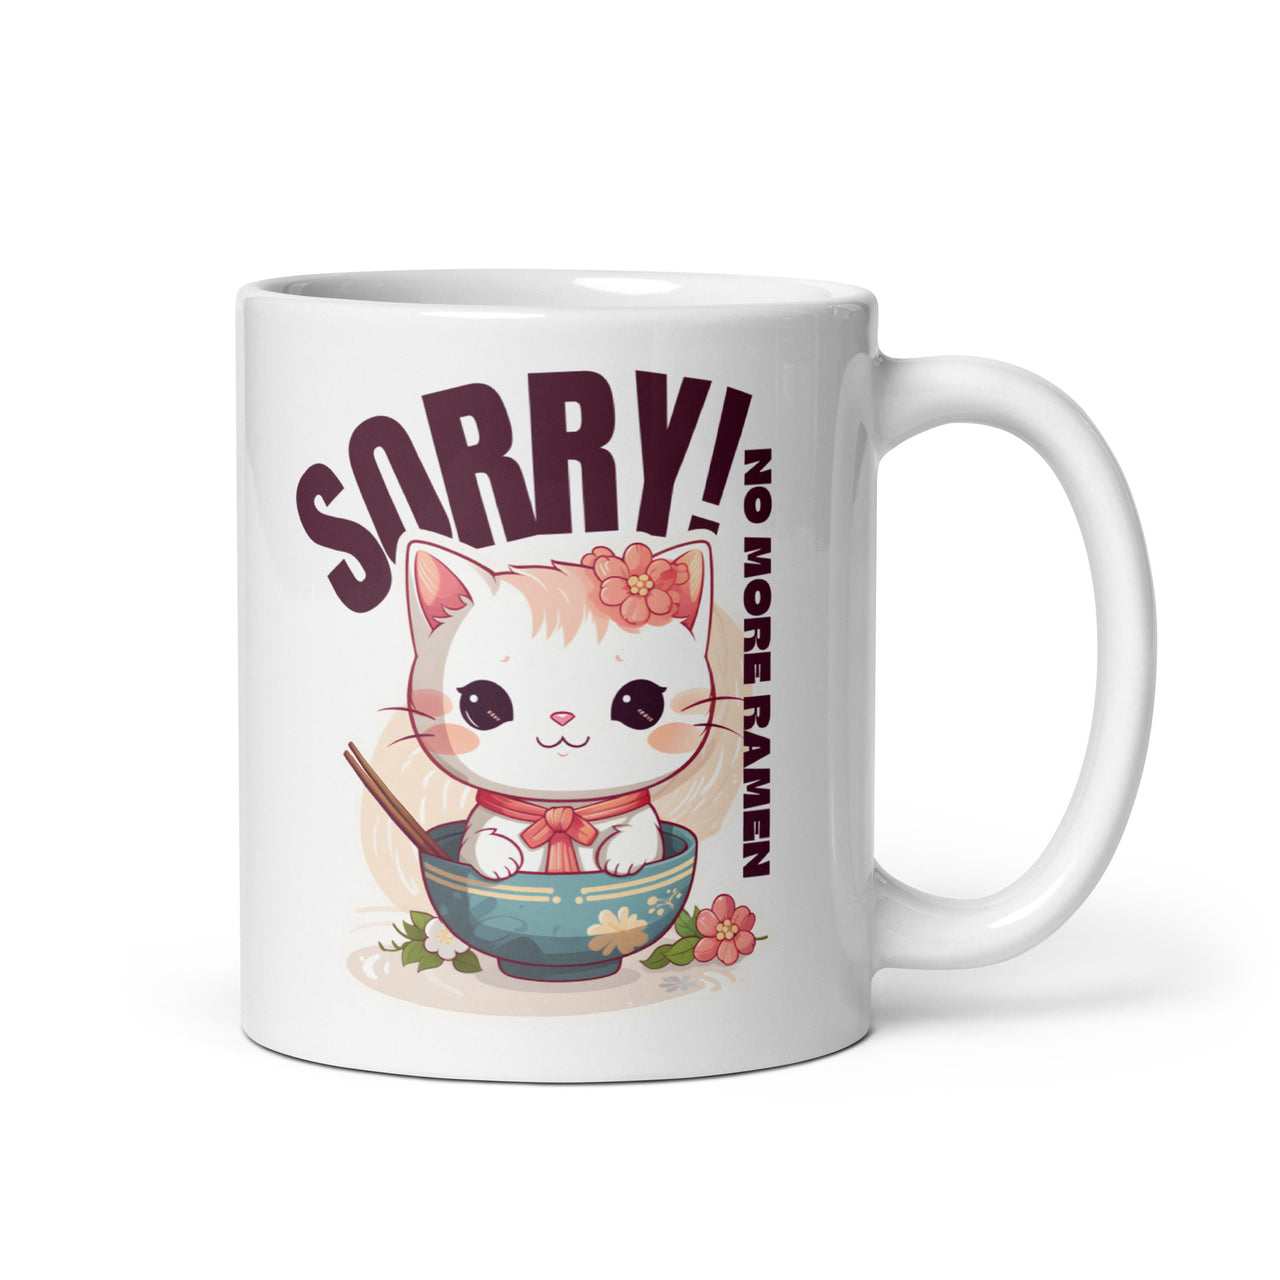 Sorry, No More Ramen: Anime Cat in Bowl White Mug